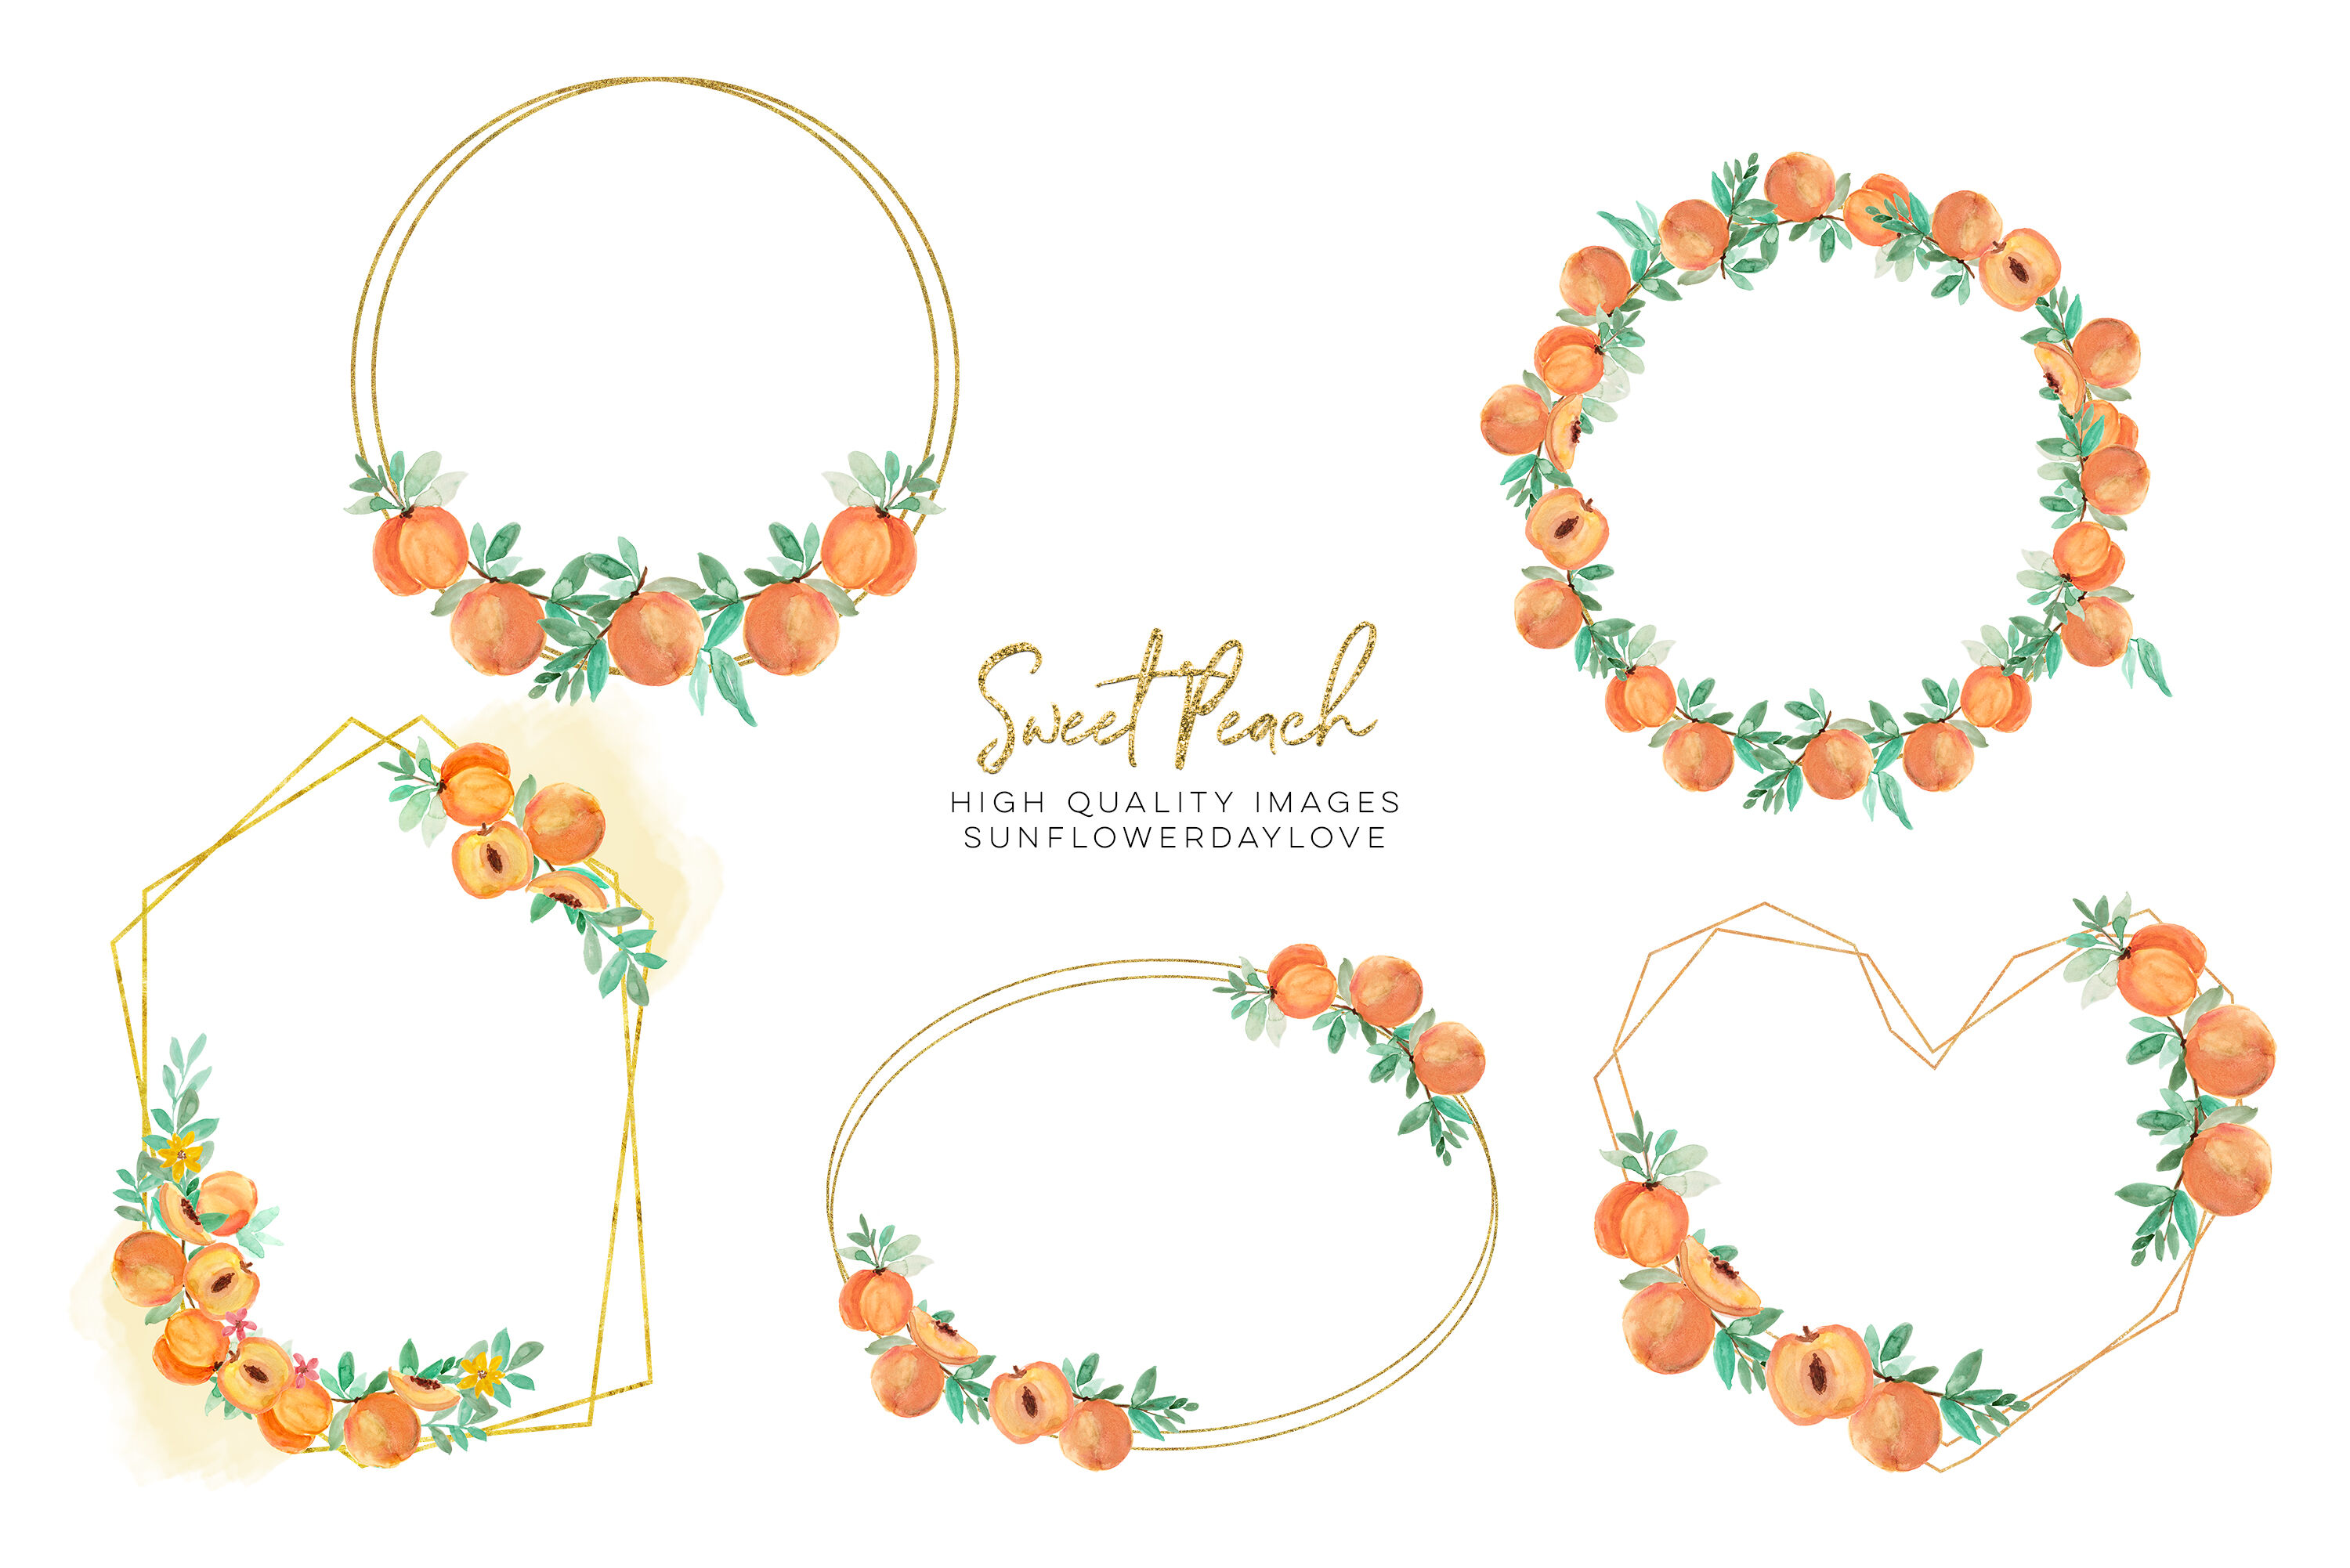 Summer Peaches Frame Clipartpeach Fruit Sweet As A Peach Pea By Sunflower Day Love Thehungryjpeg 1782